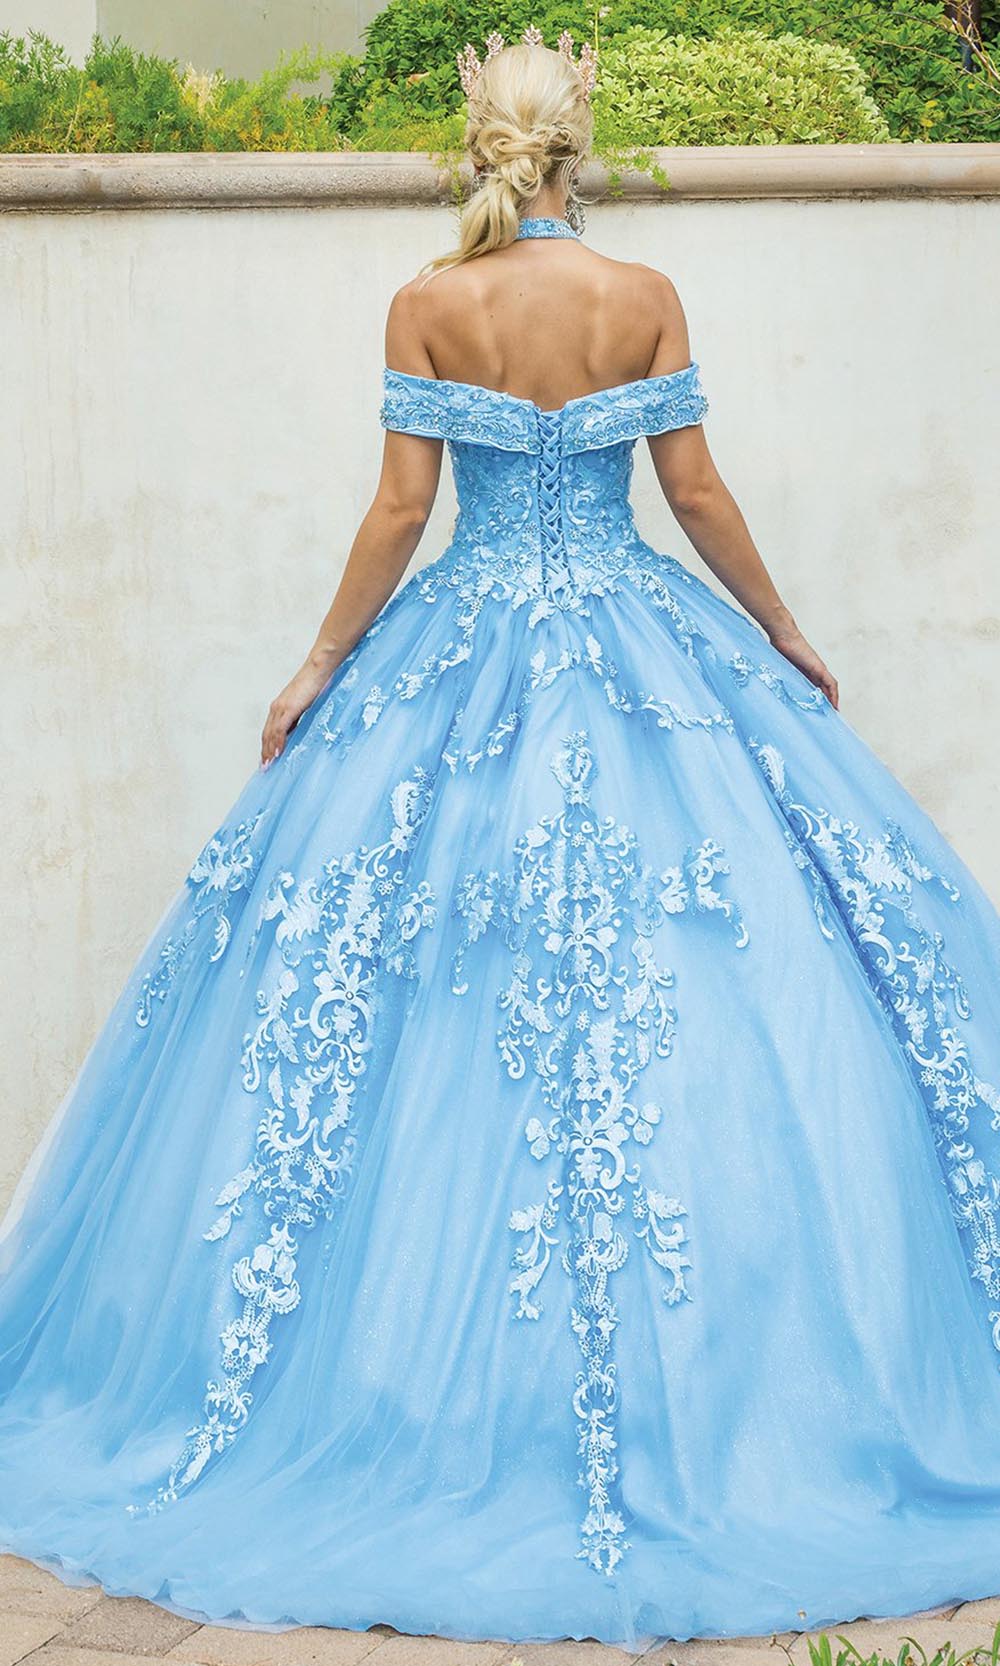  Dancing Queen - 1577 Halter Ornate Ballgown In Blue